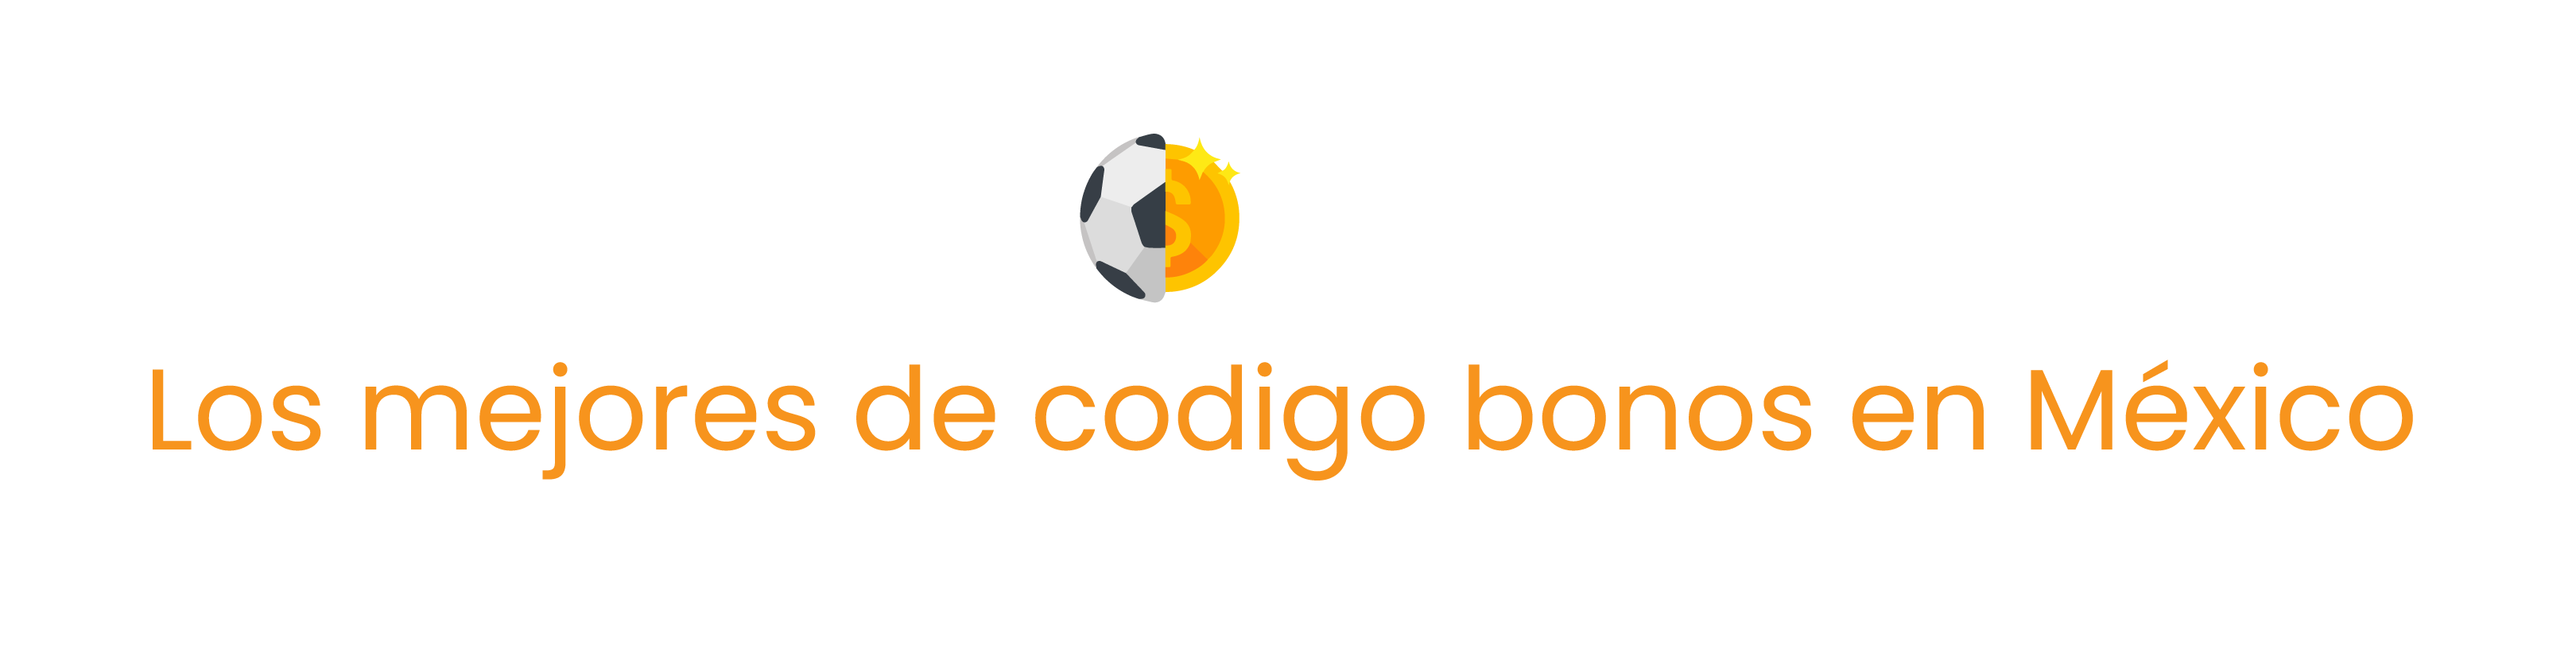 codigobonusparaguay